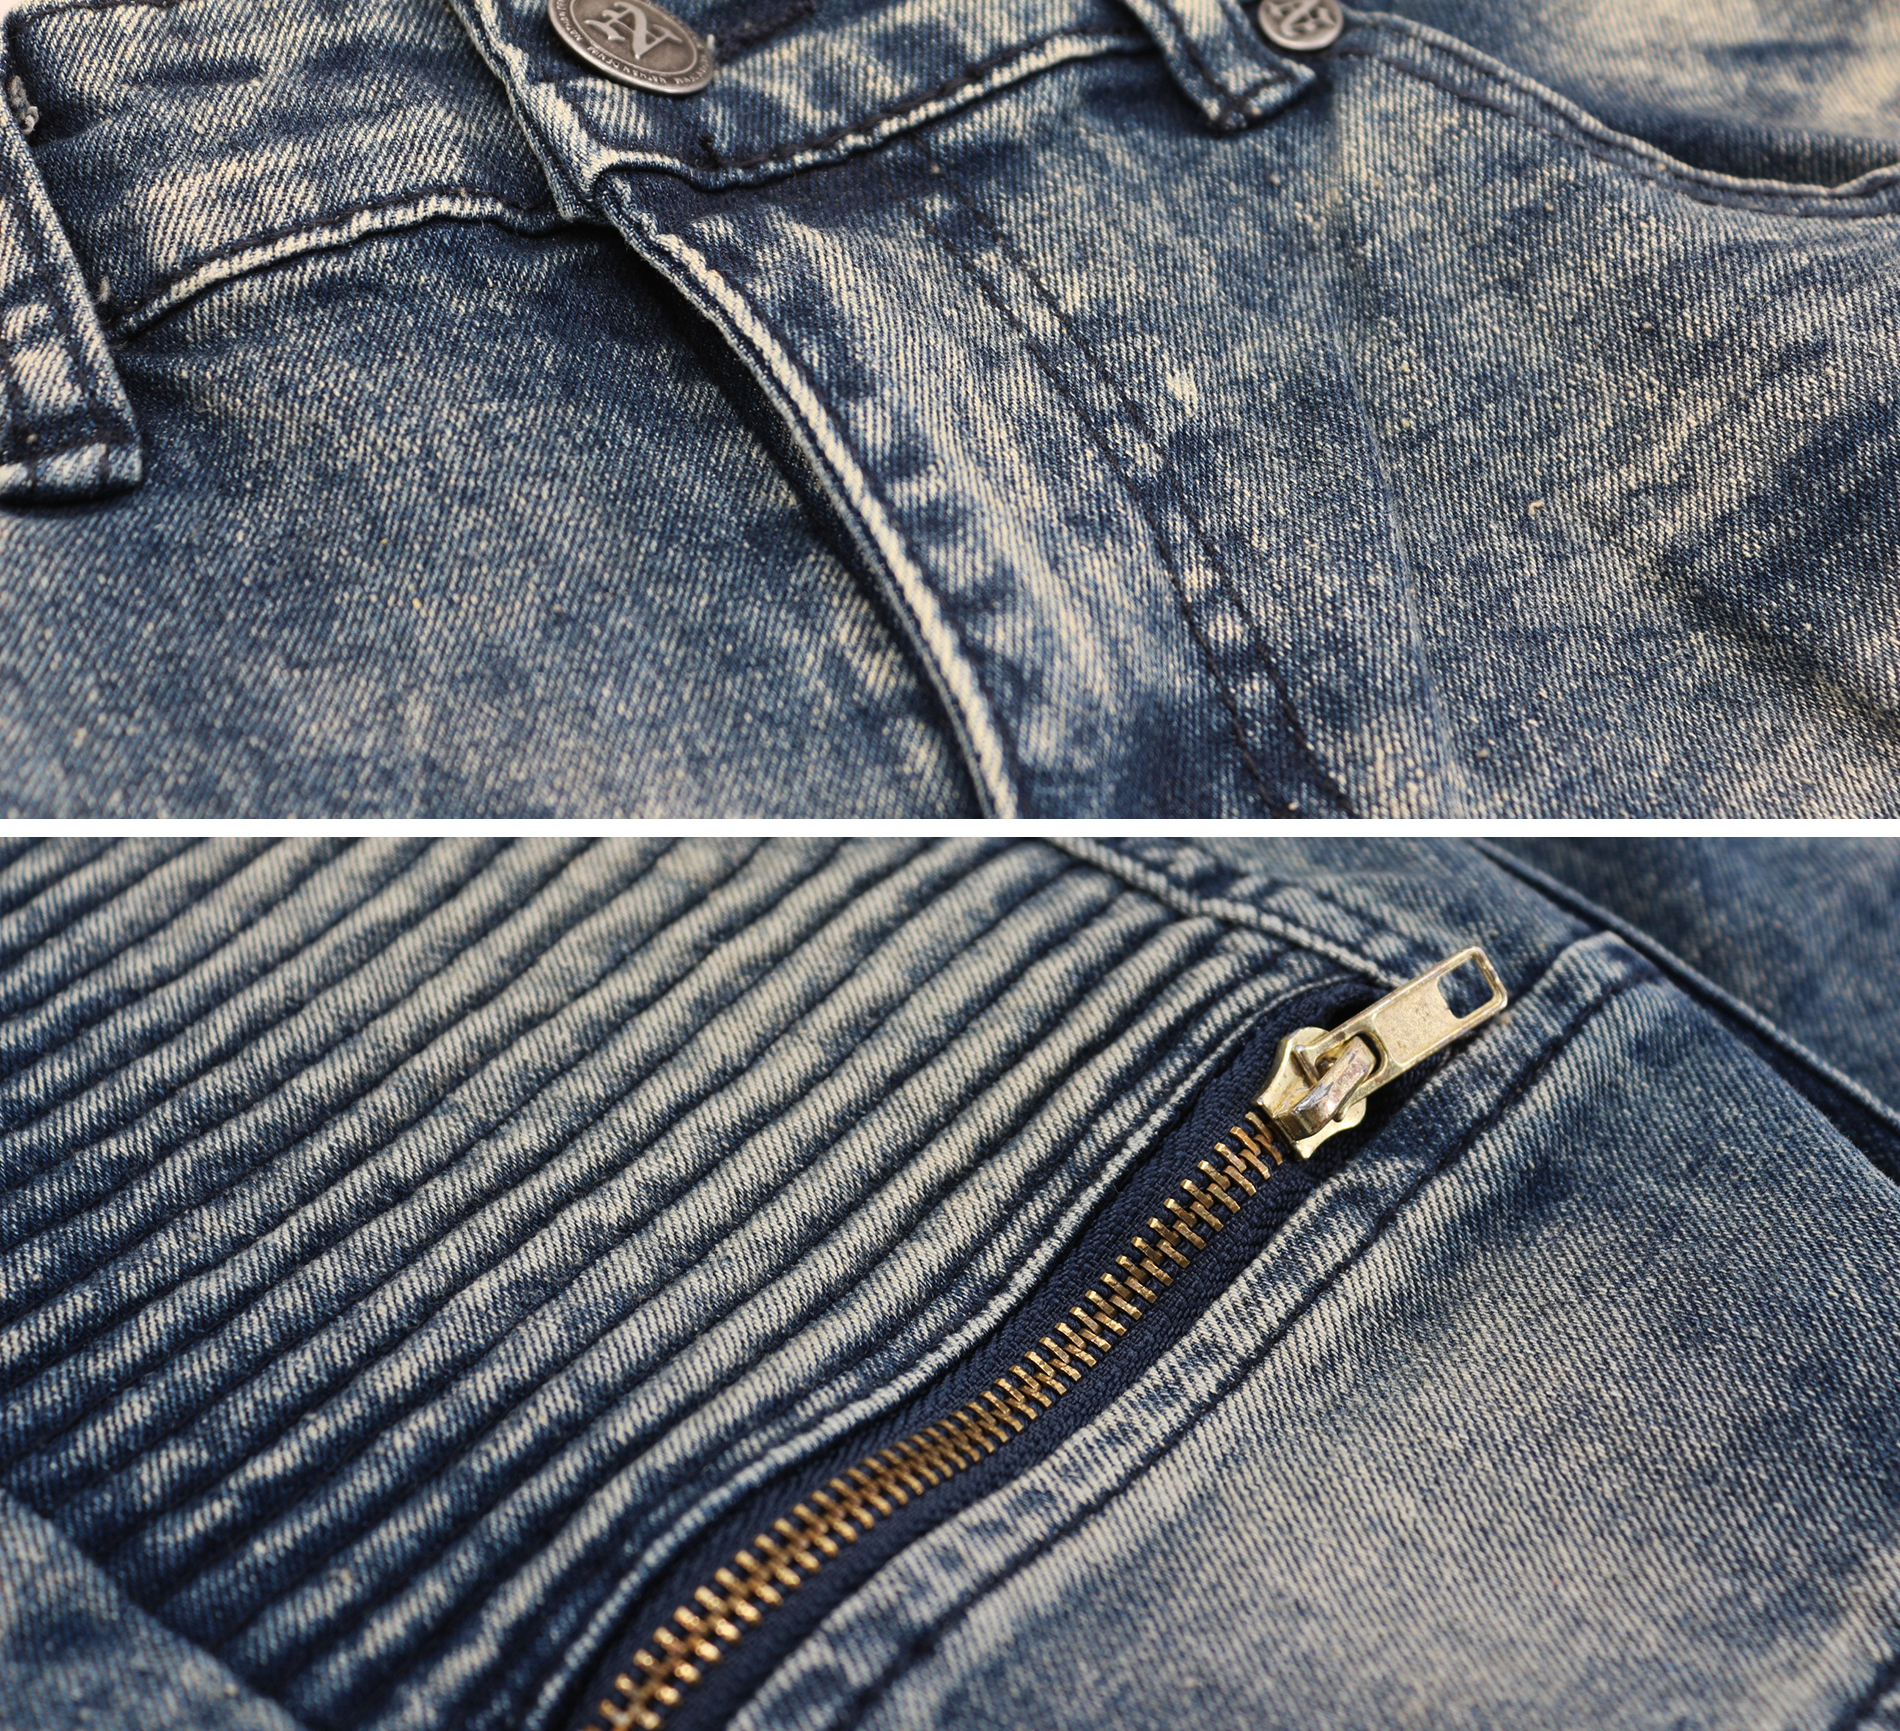 Men's Muscle Fit Distressed Moto Quilt Zipper Super Skinny Stretch Denim Jeans (DXZ-80-VN/SS-Blue, 30x30) - image 3 of 3